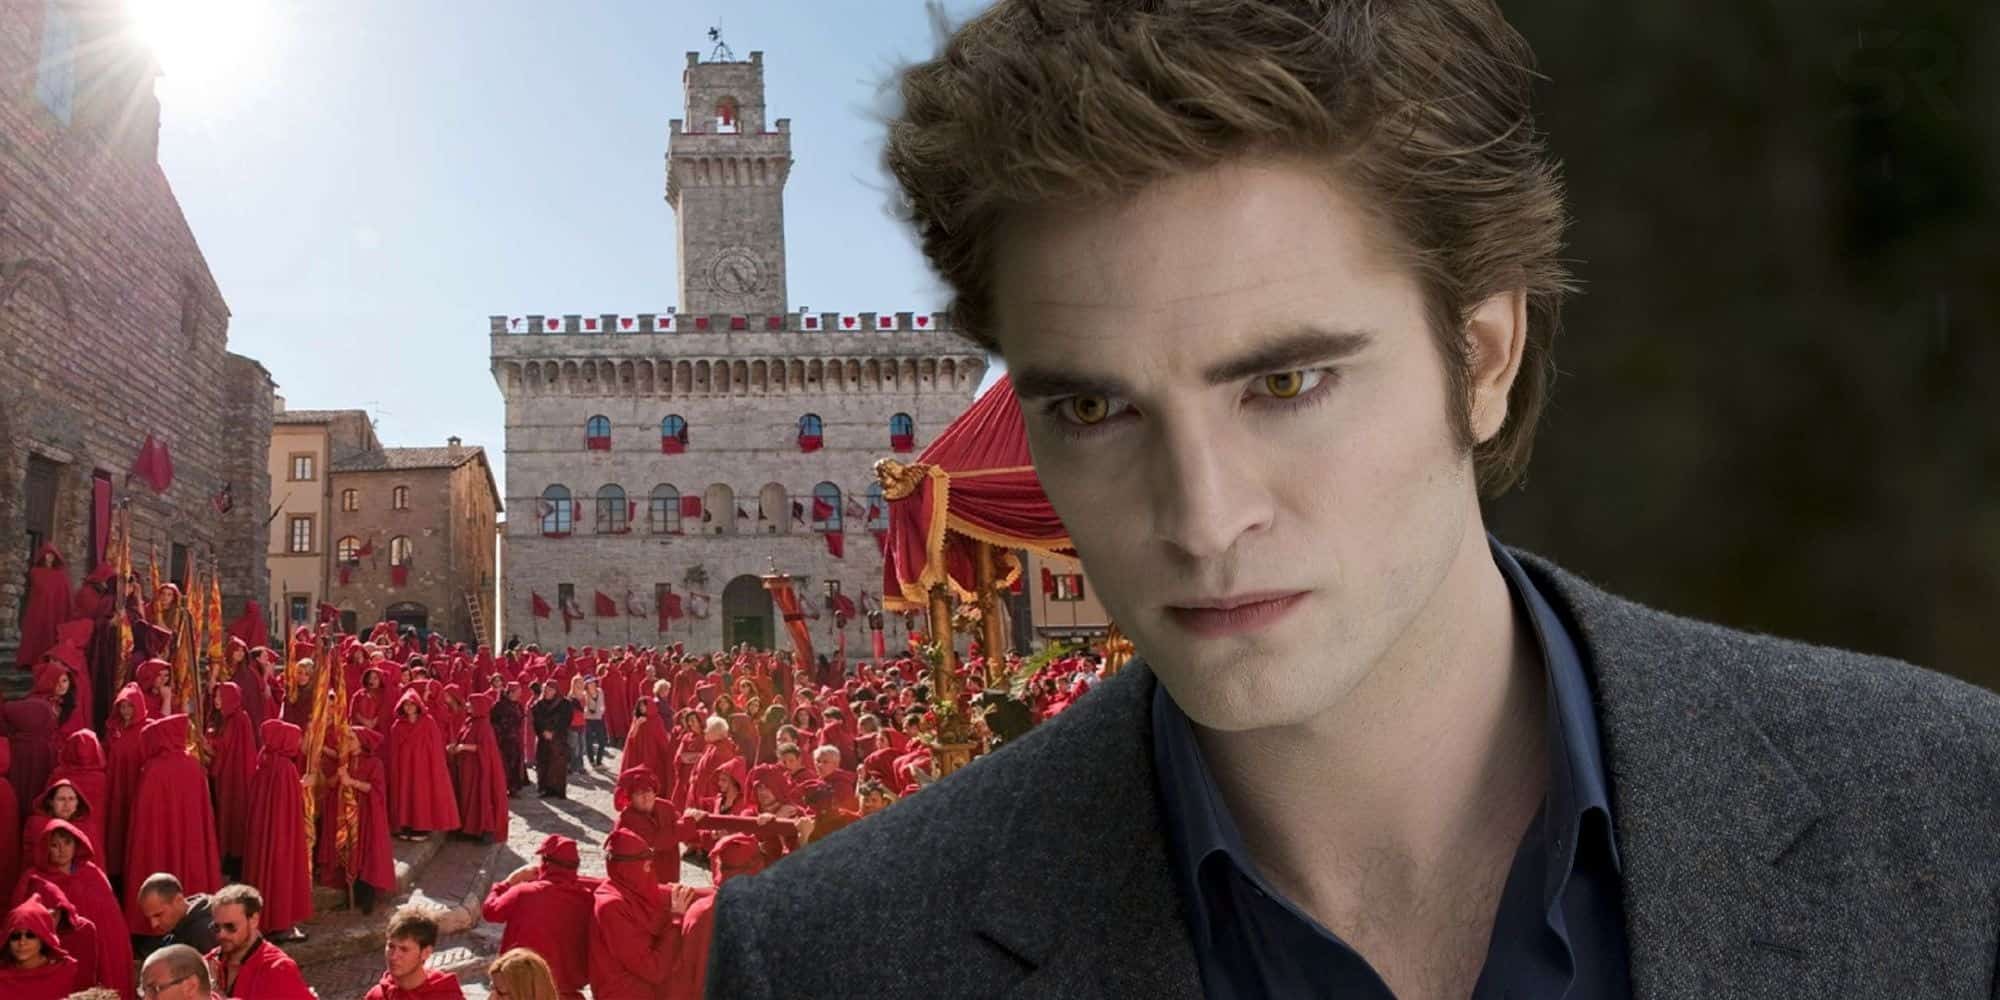 Why Did Edward Leave Bella Amidst So Much Love?